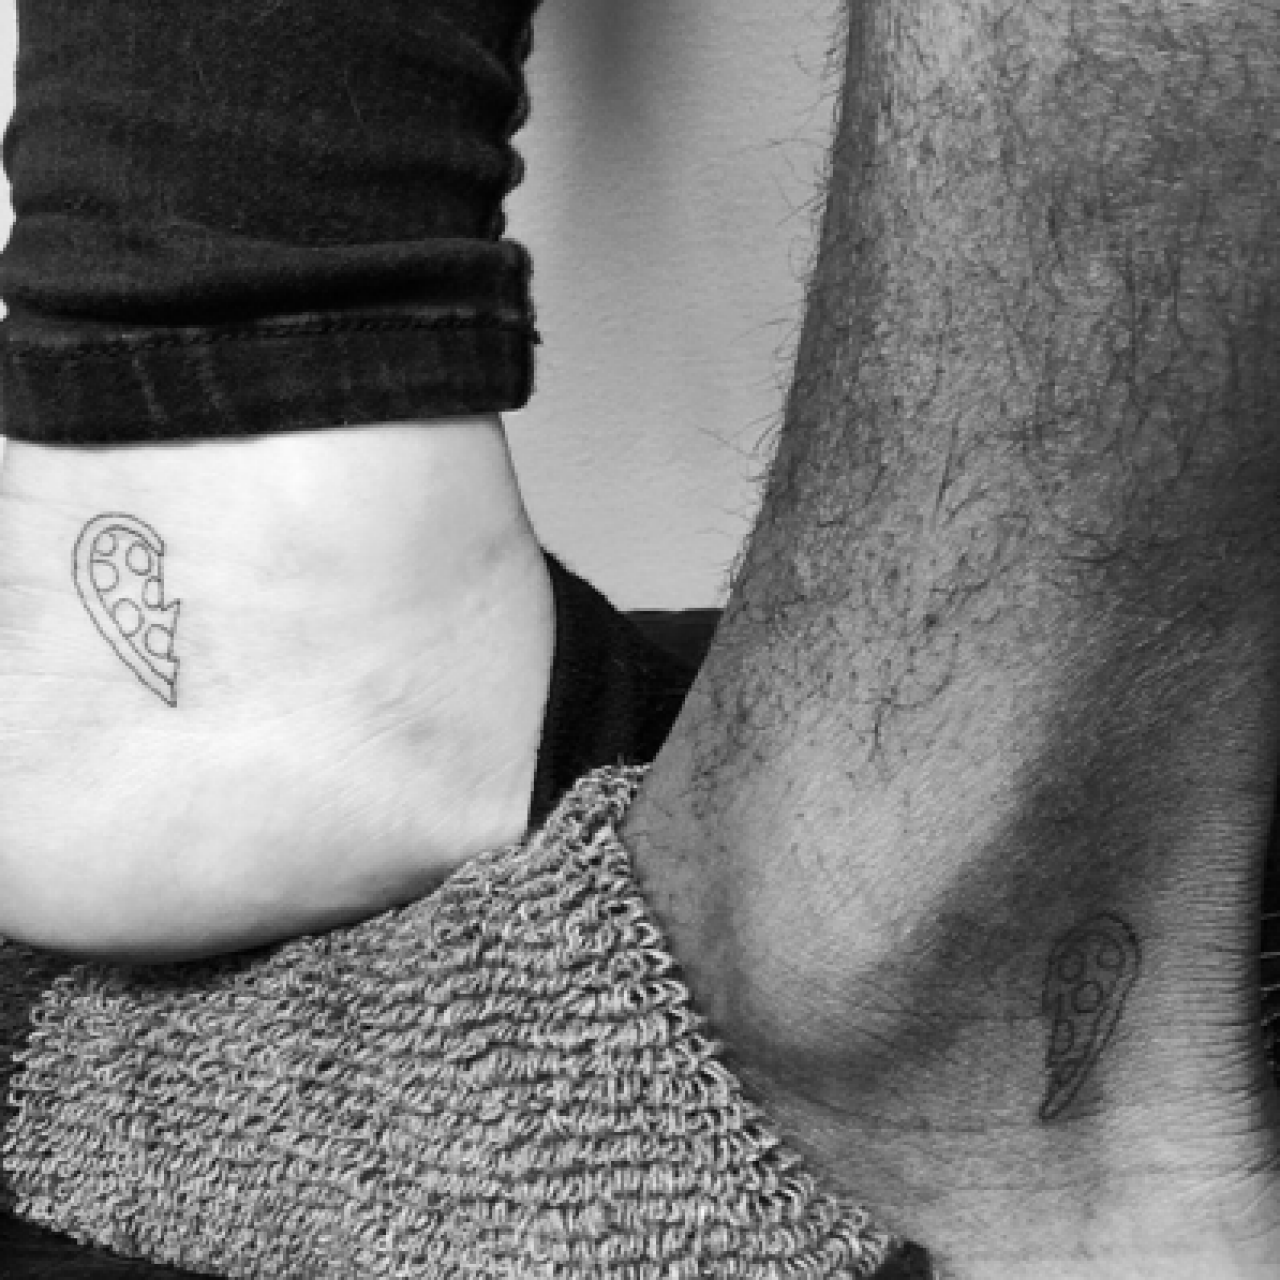 Father n son matching tattoos how cute! #kingsmillresort #hennatattoos  #hennabykristyclewis #bookaparty #poolparty | Instagram